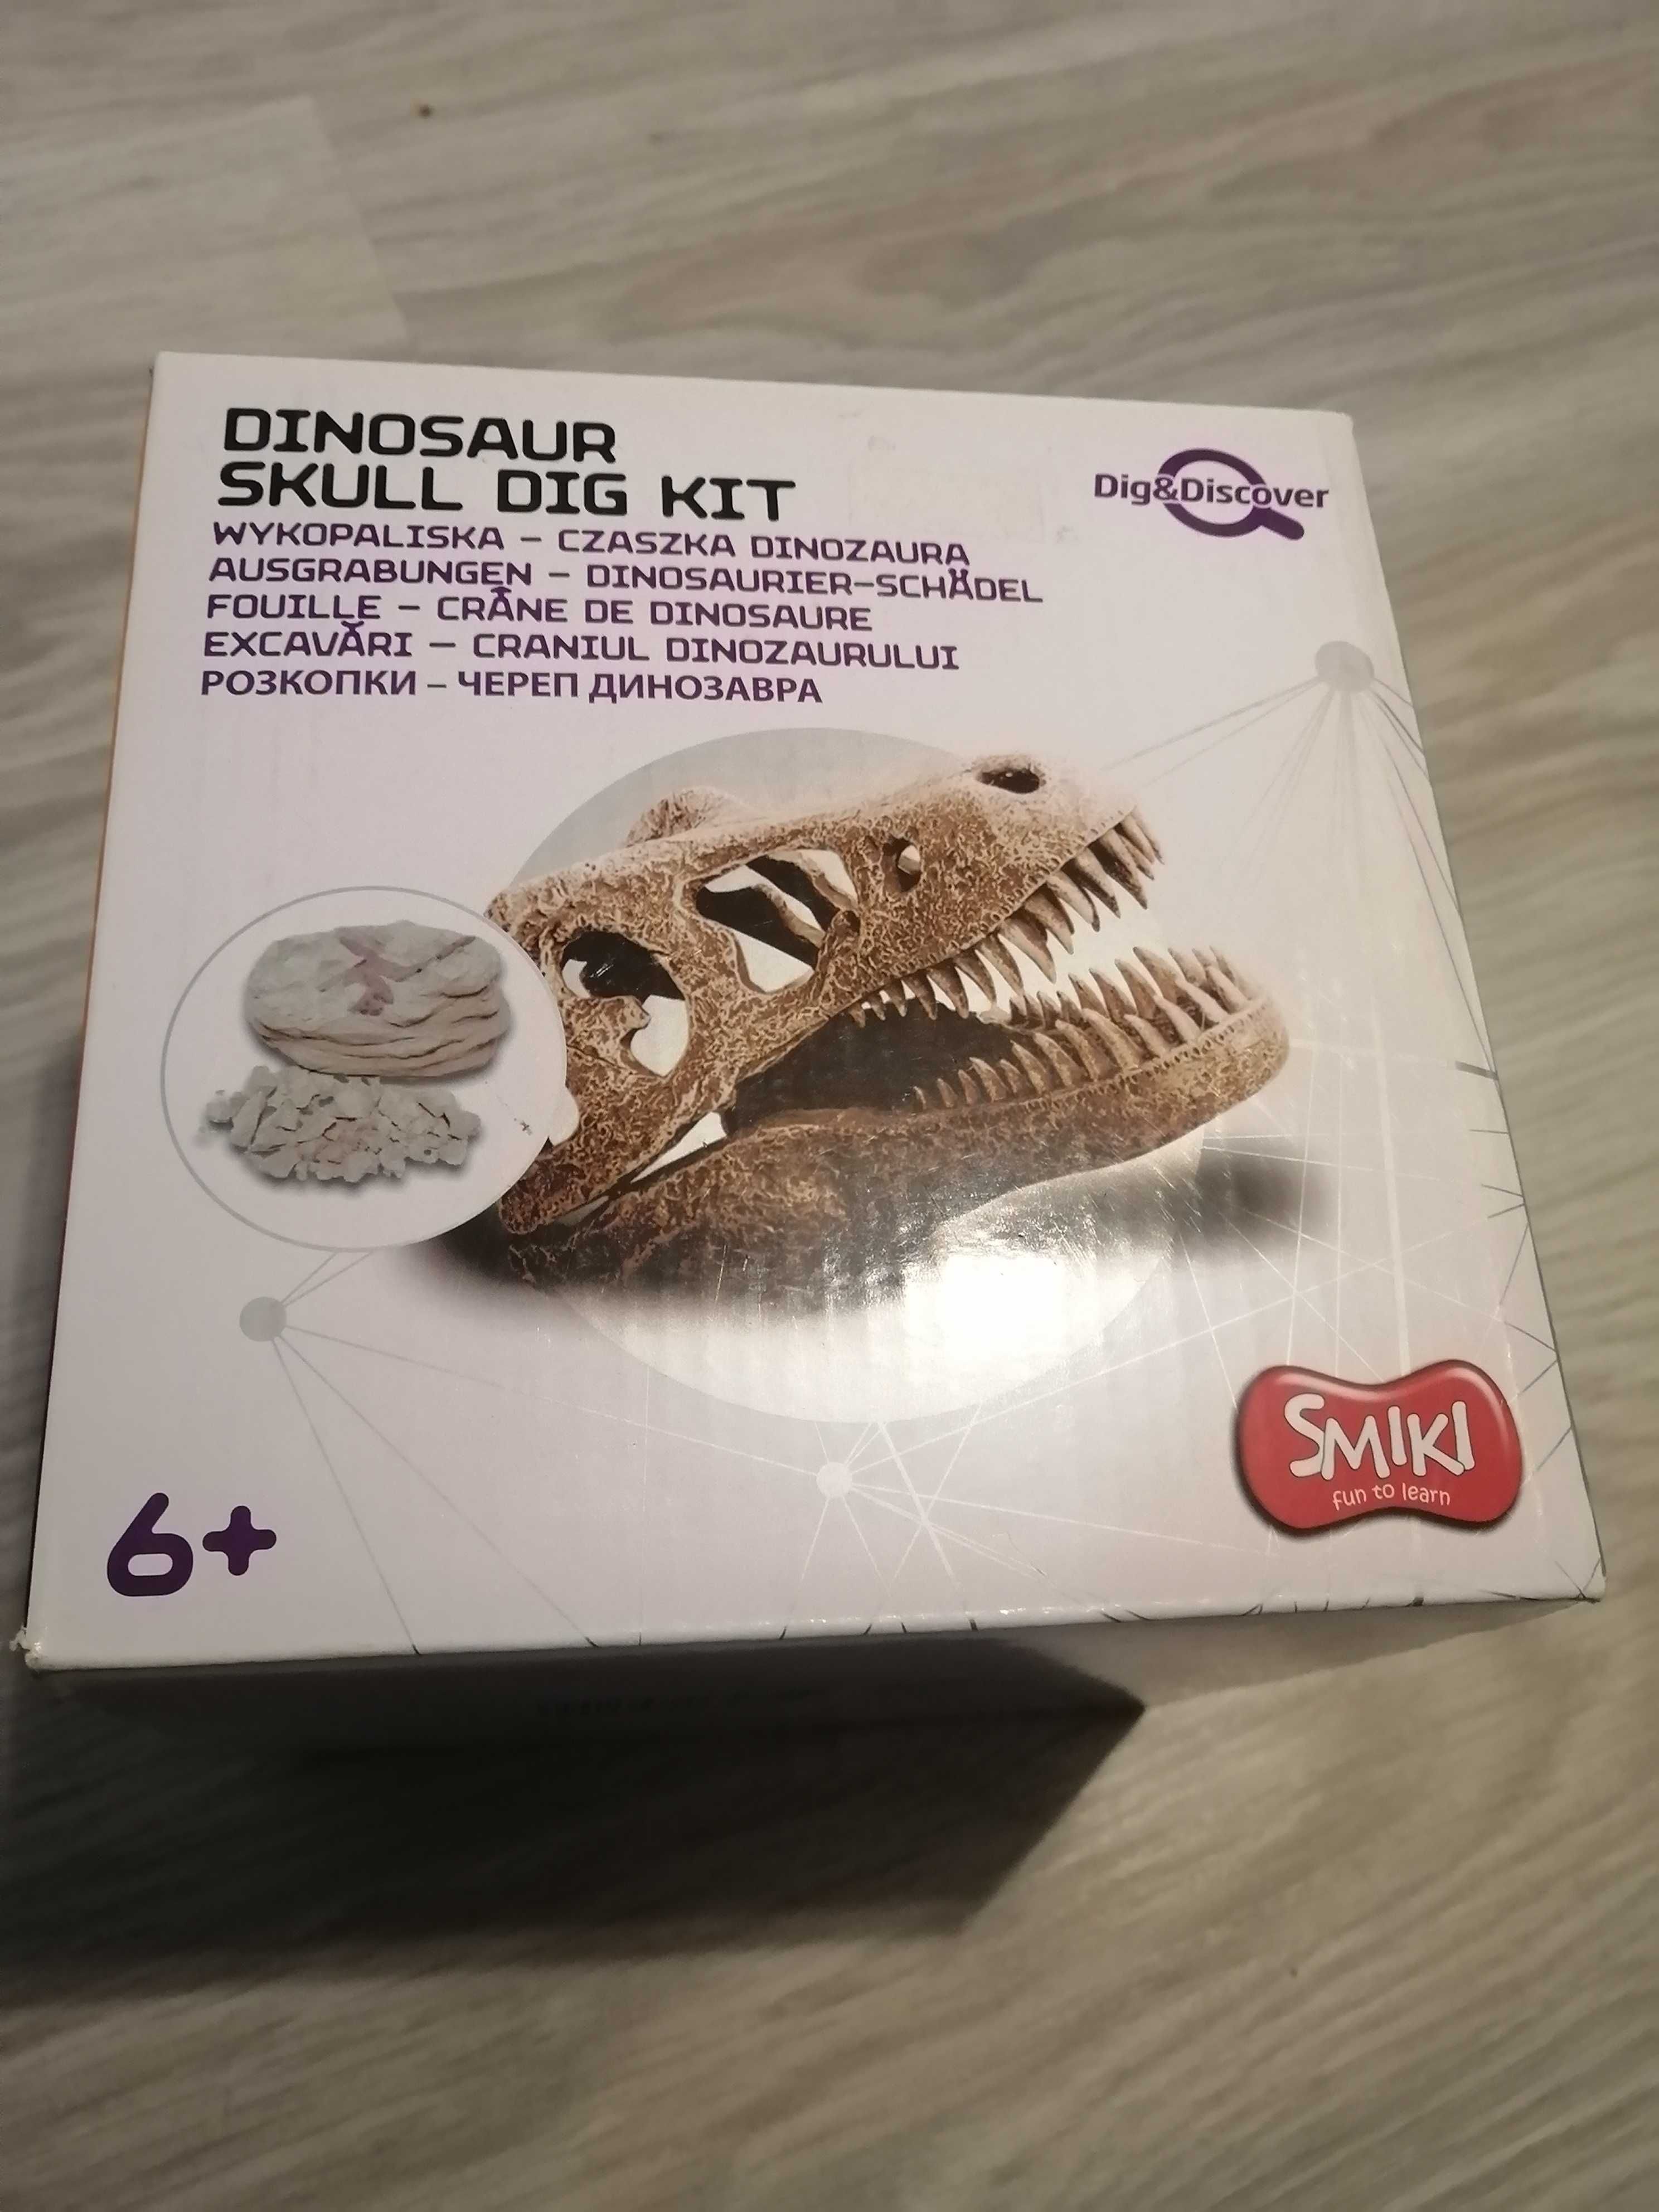 Dinosaur skull digo kit smiki wykopaliska czaszka dinozaura